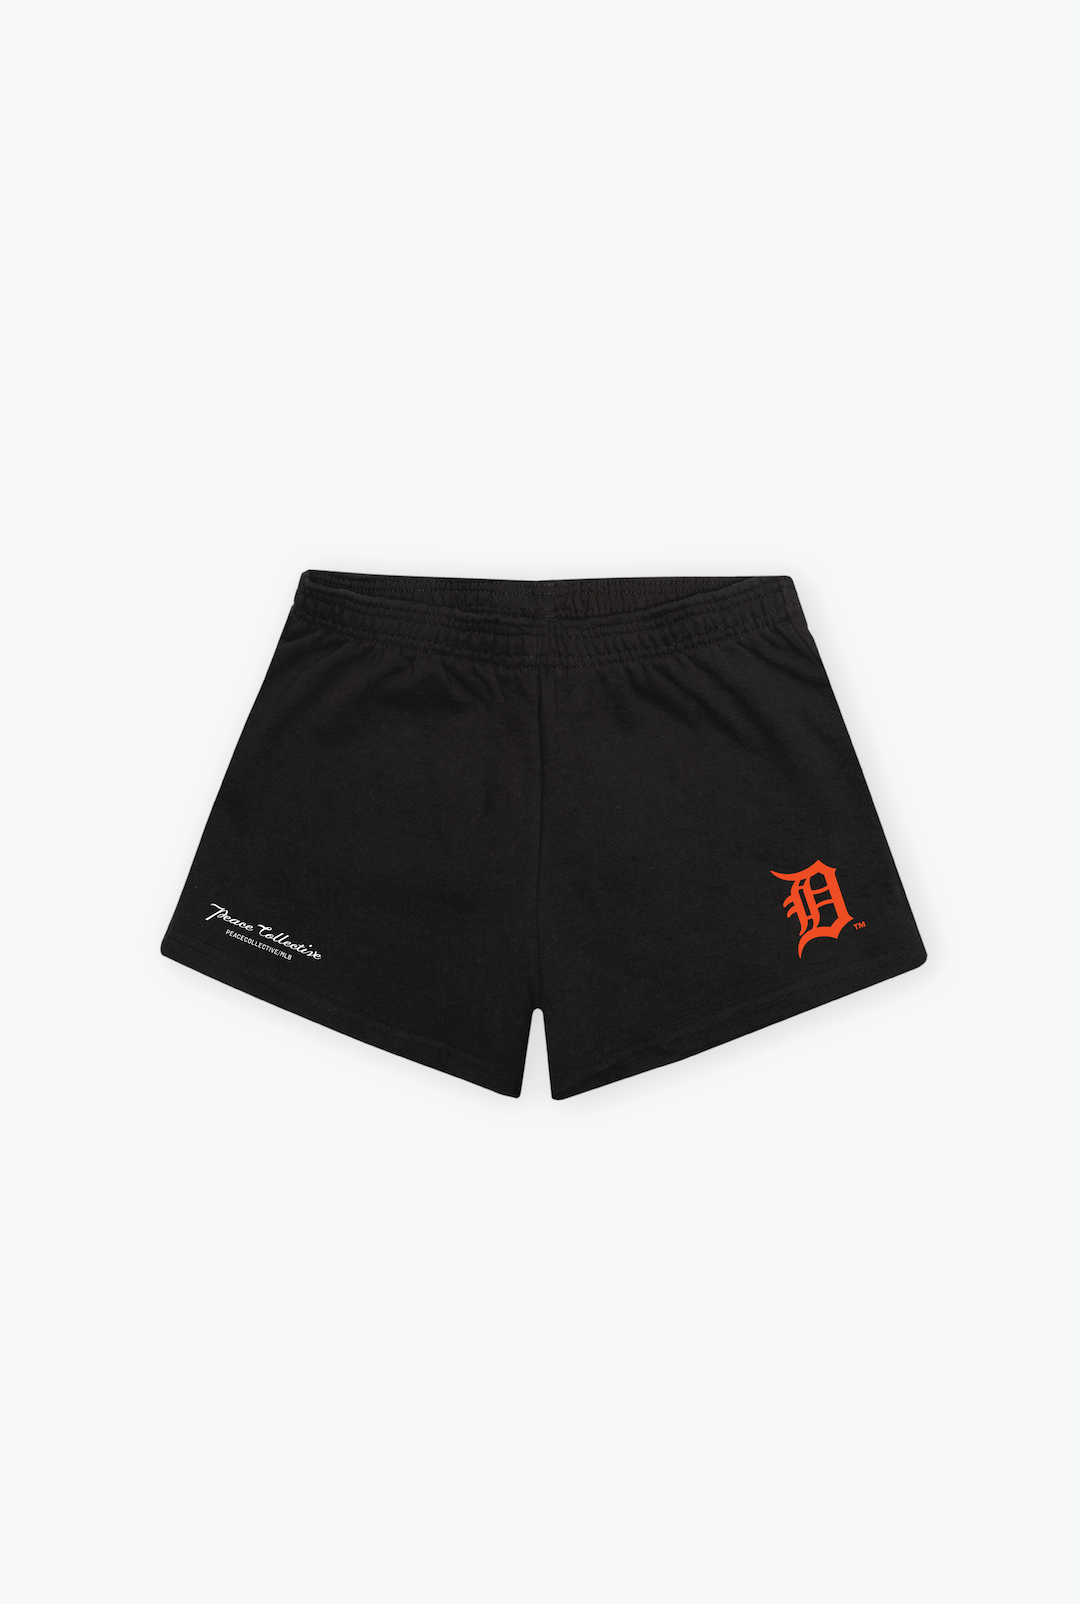 Detroit Tigers Women's Fleece Shorts - Black